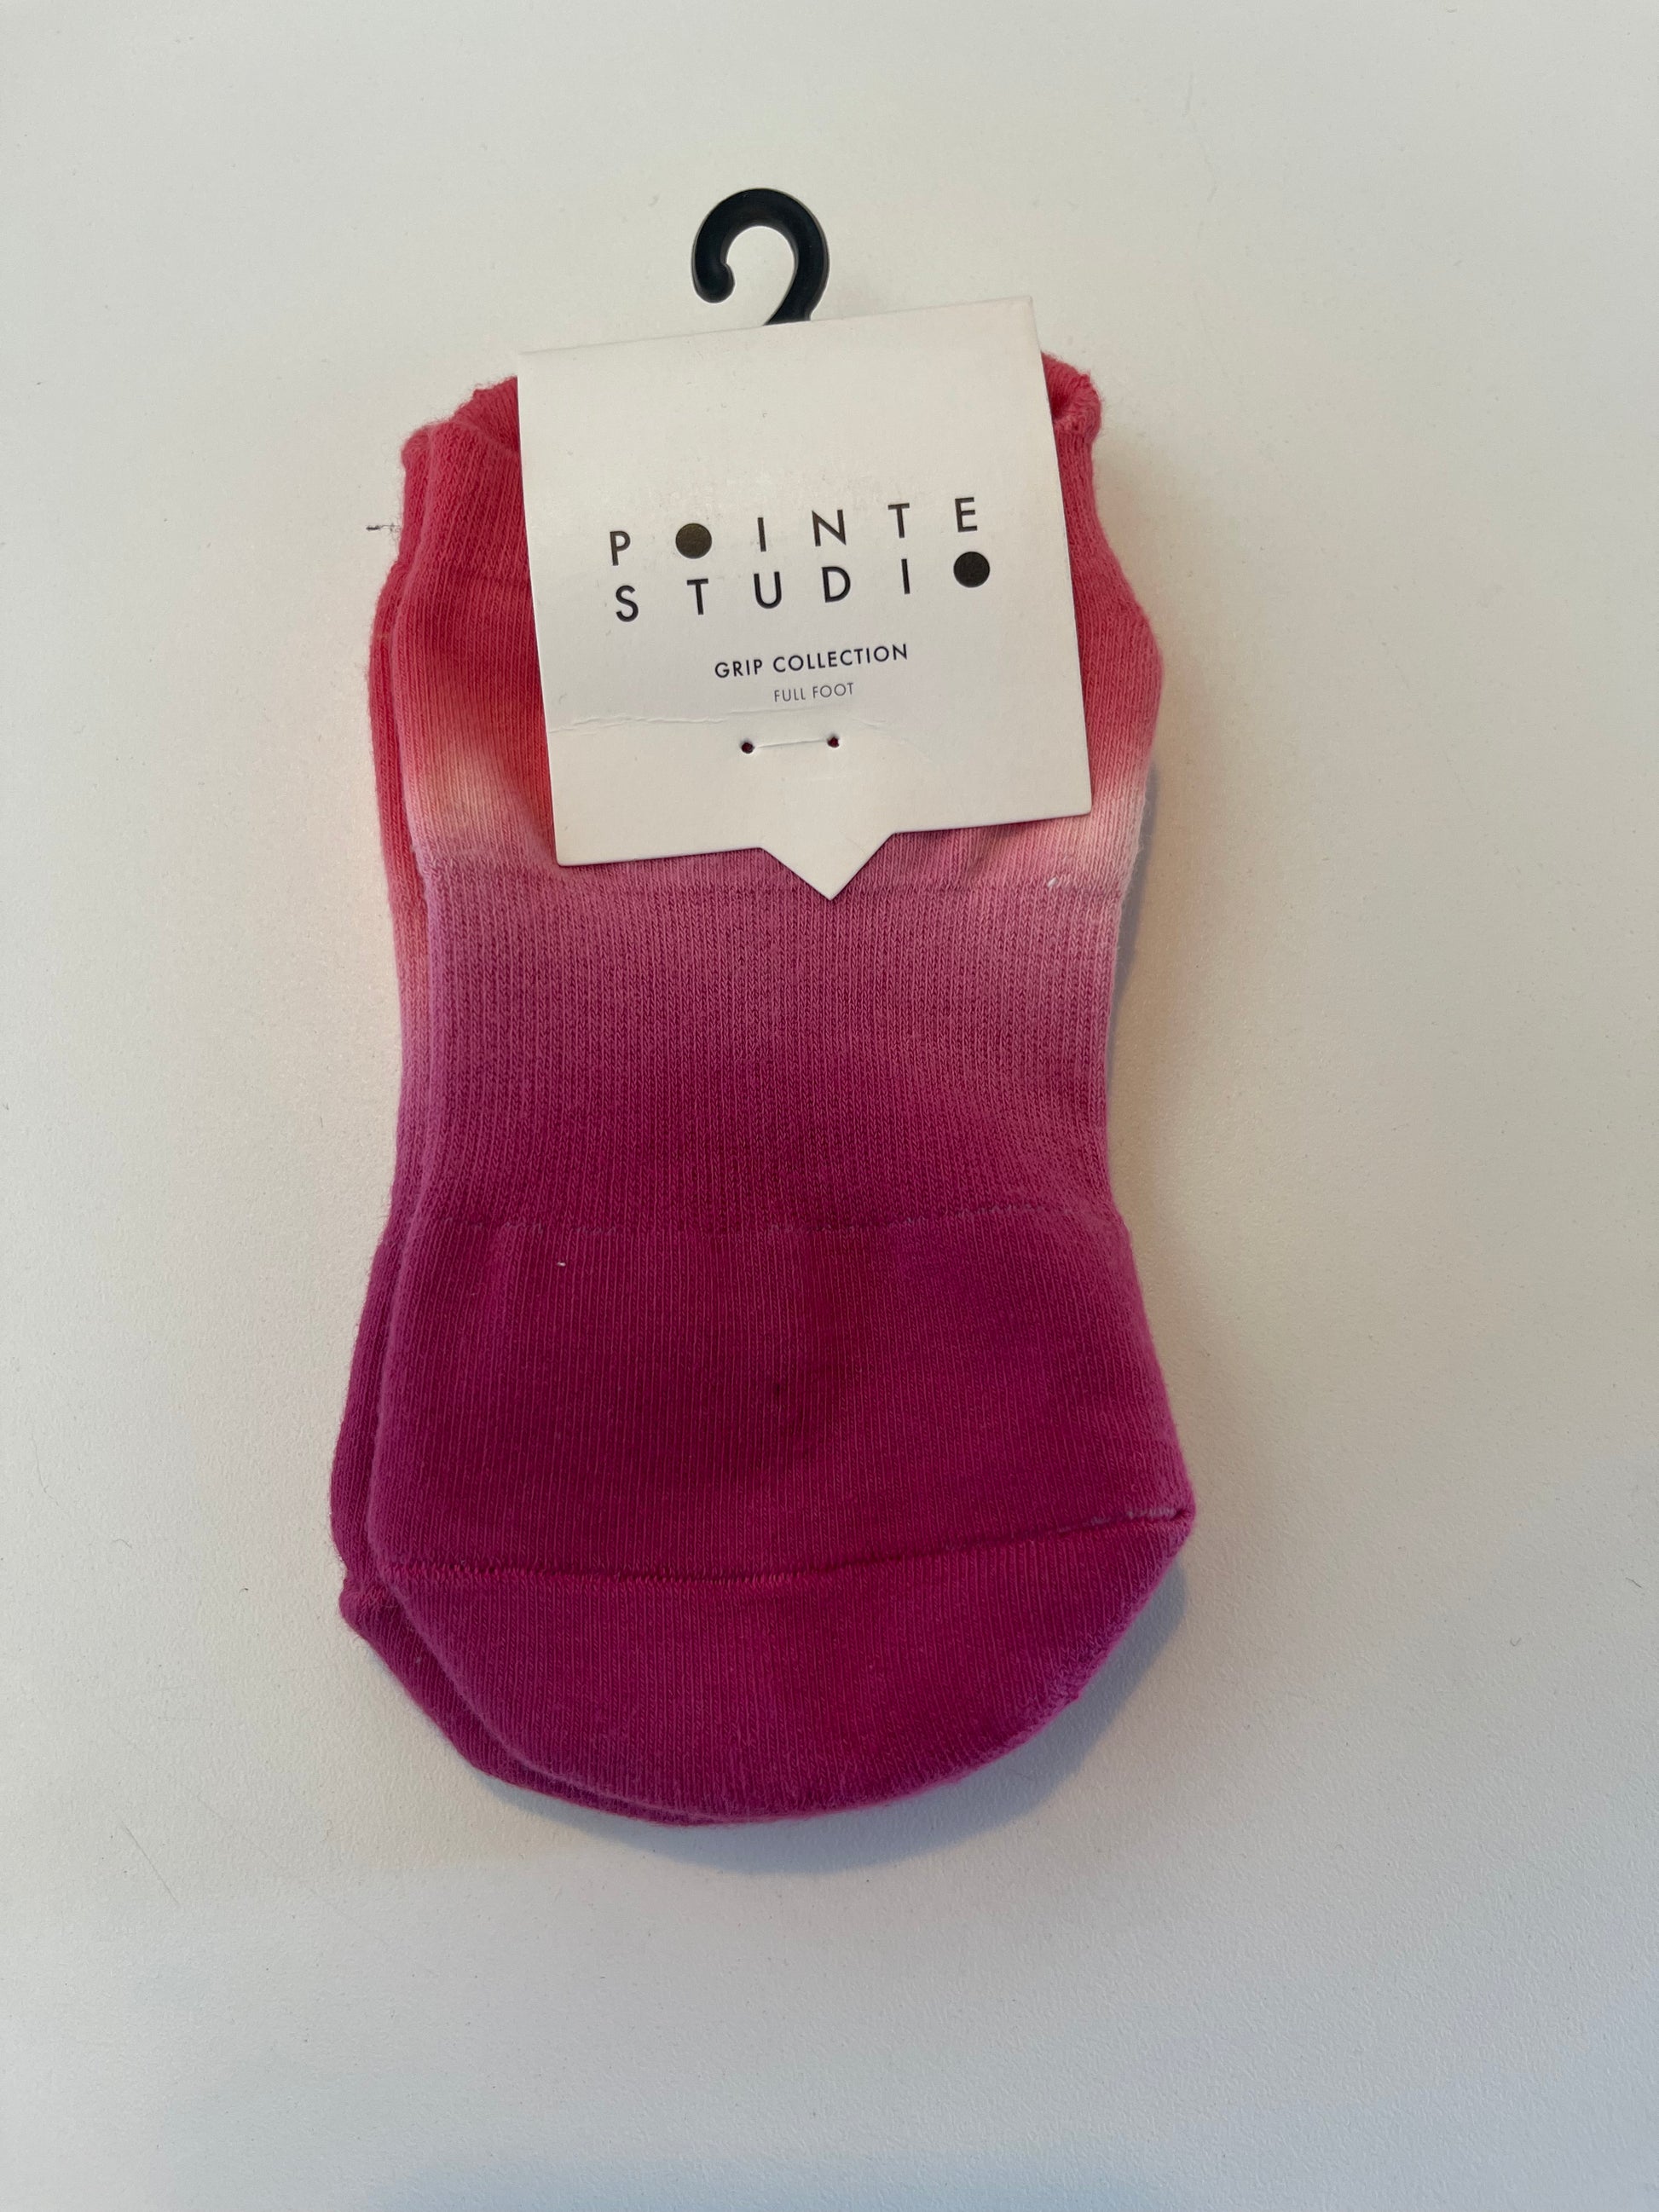 Pure Barre Grip Socks – Pure Barre - Anaheim Hills & Brea